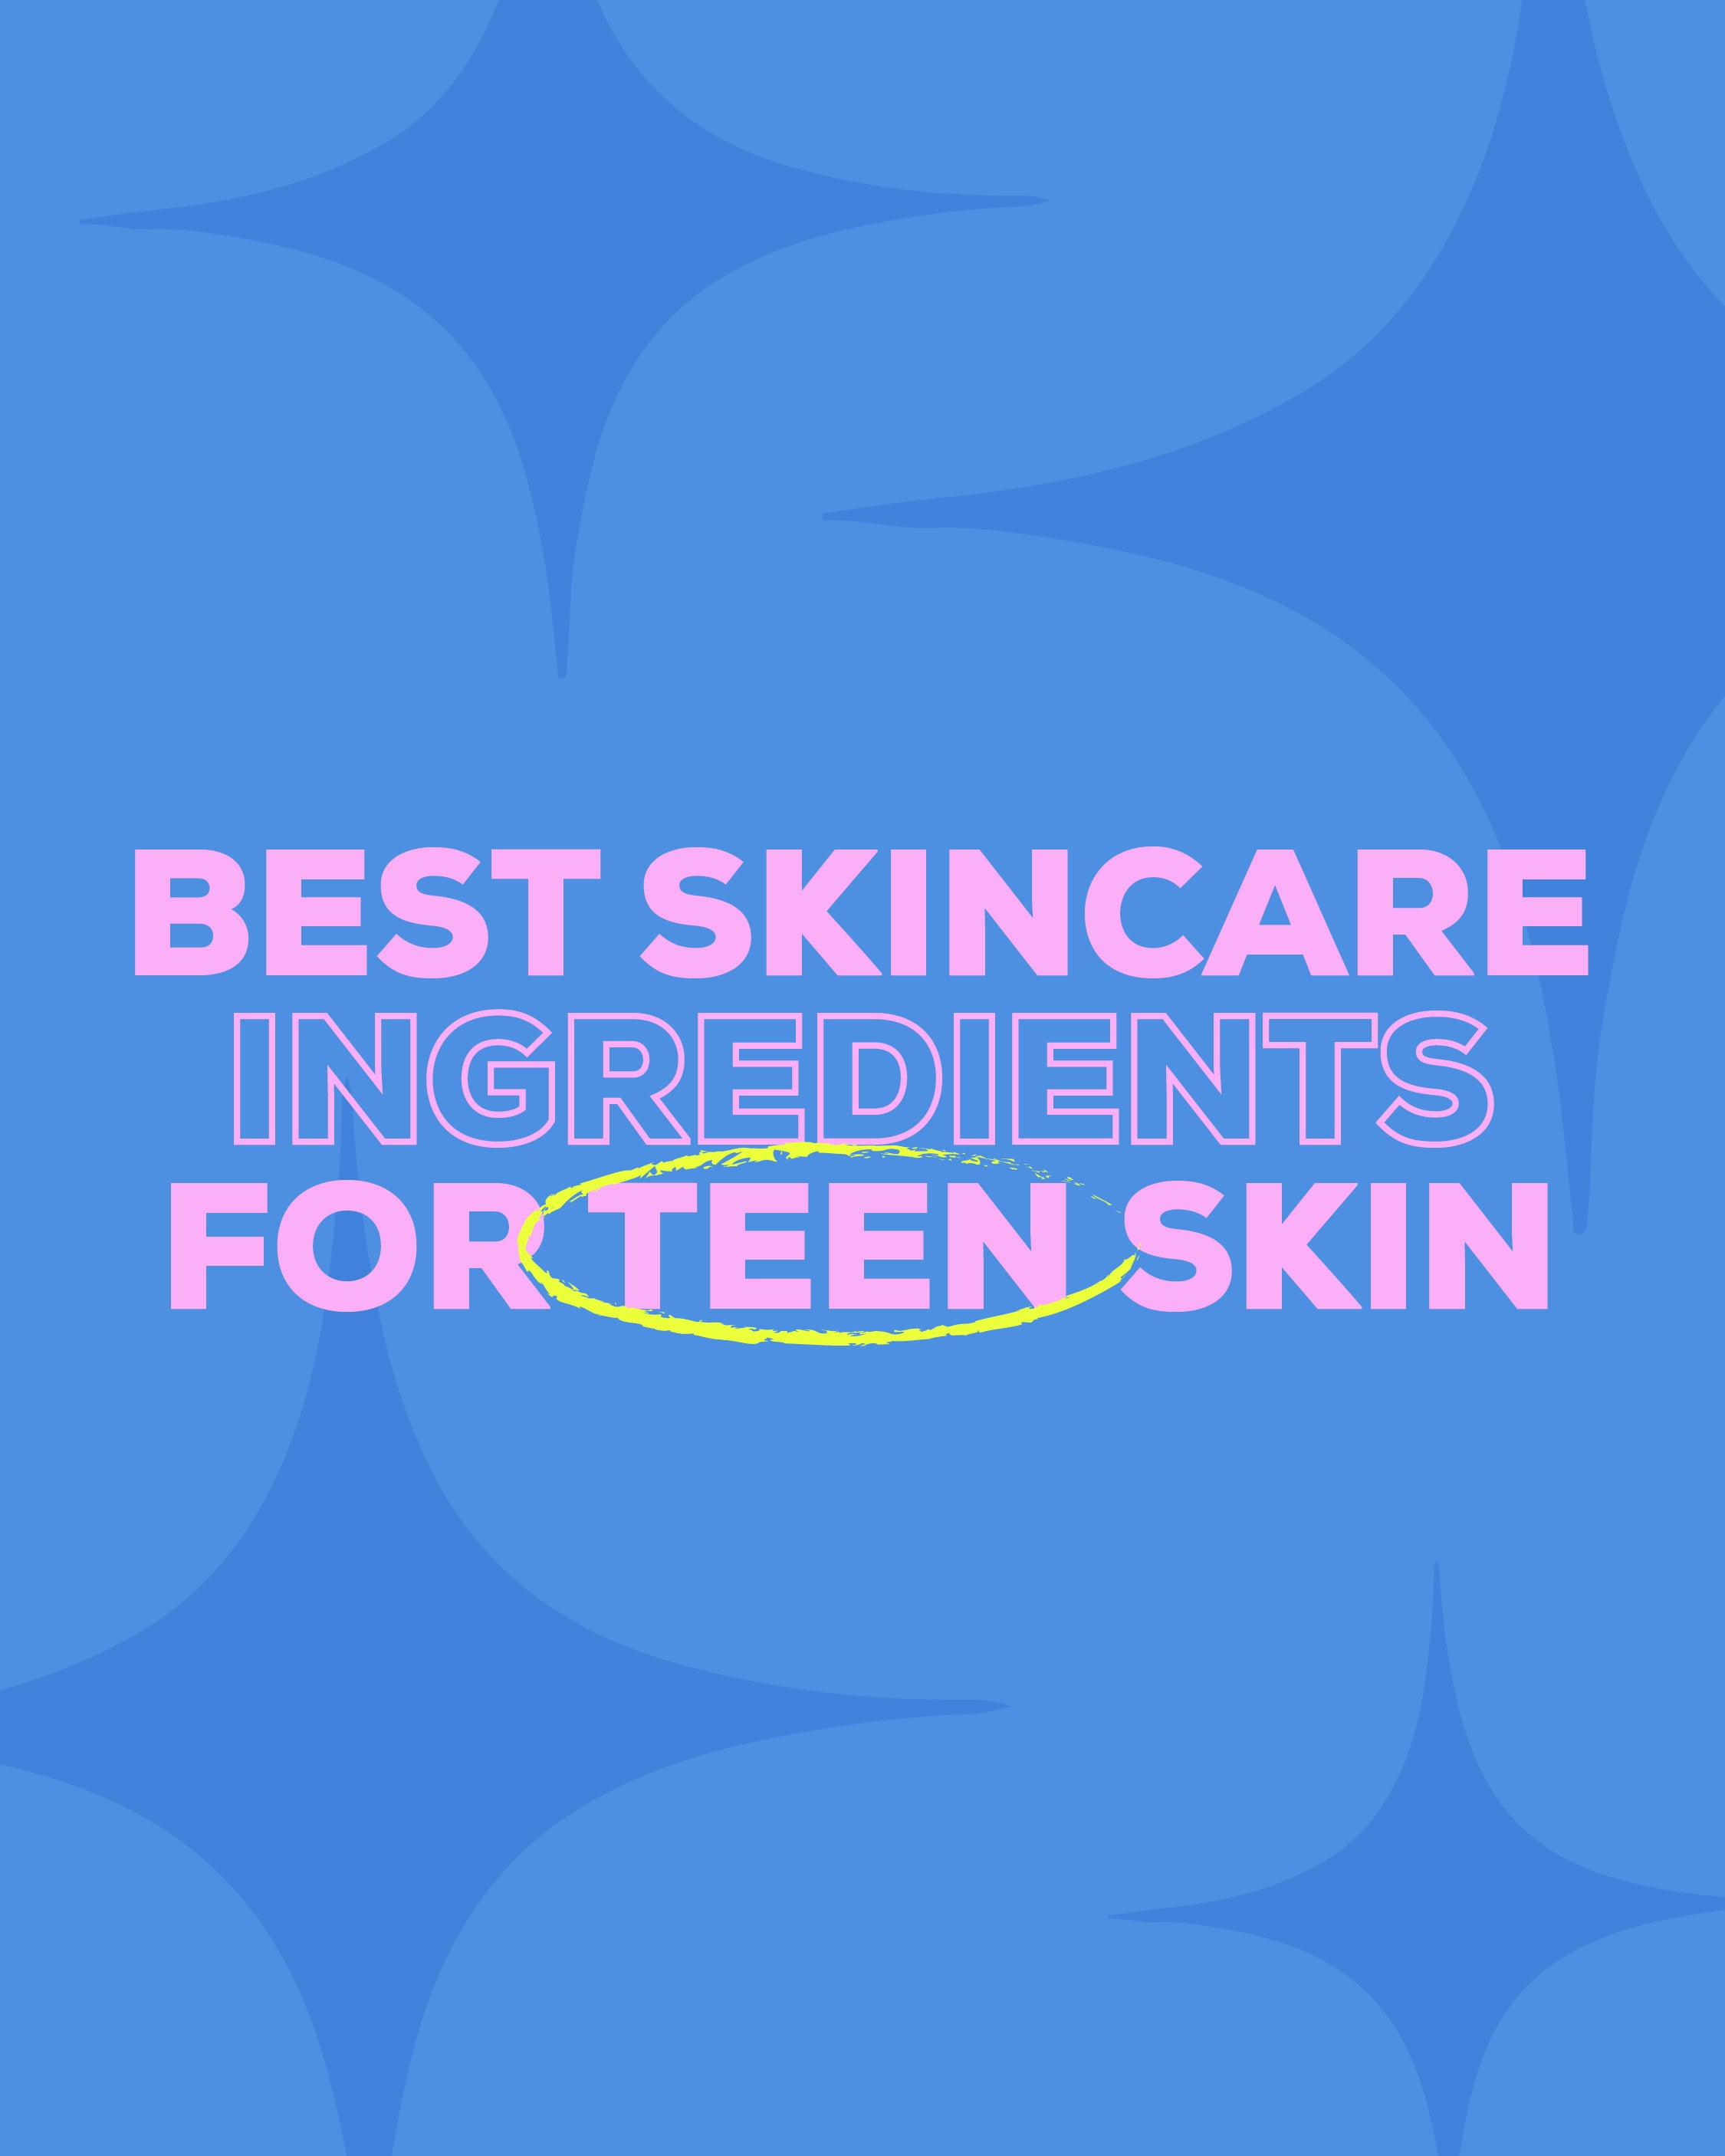 Best skincare ingredients for teens